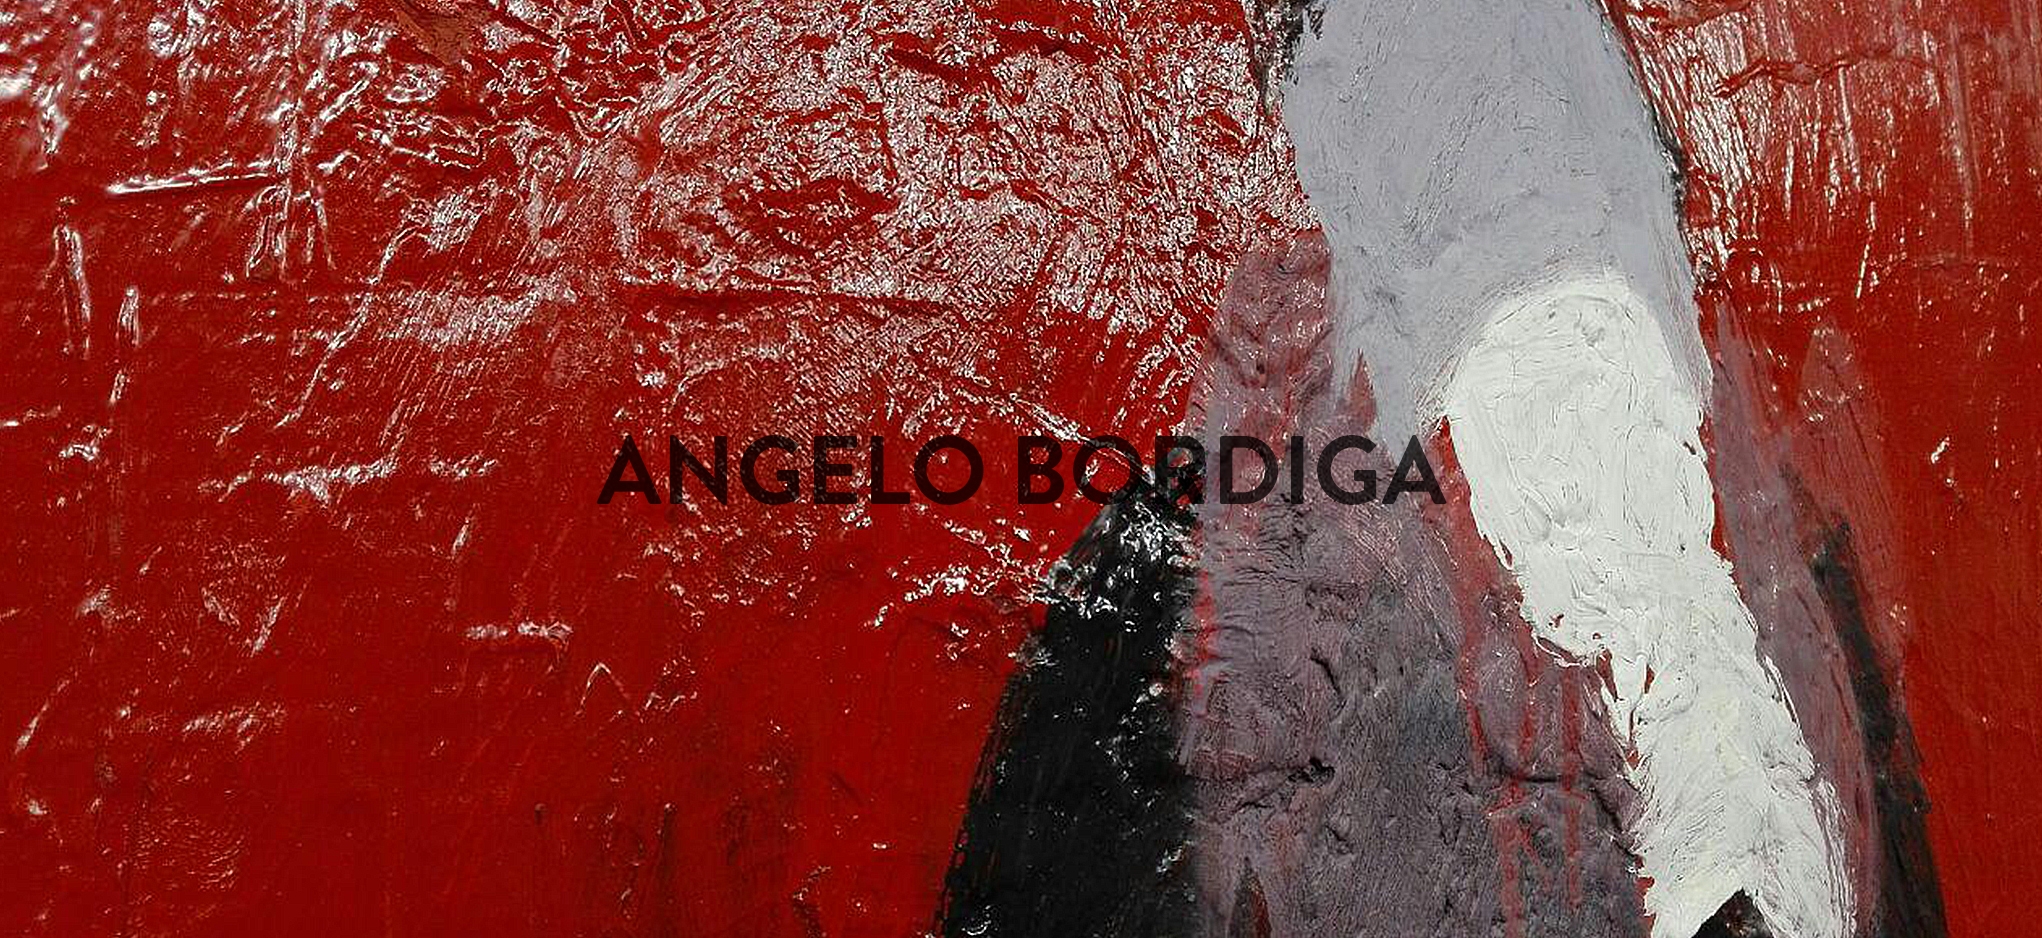 Angelo Bordiga